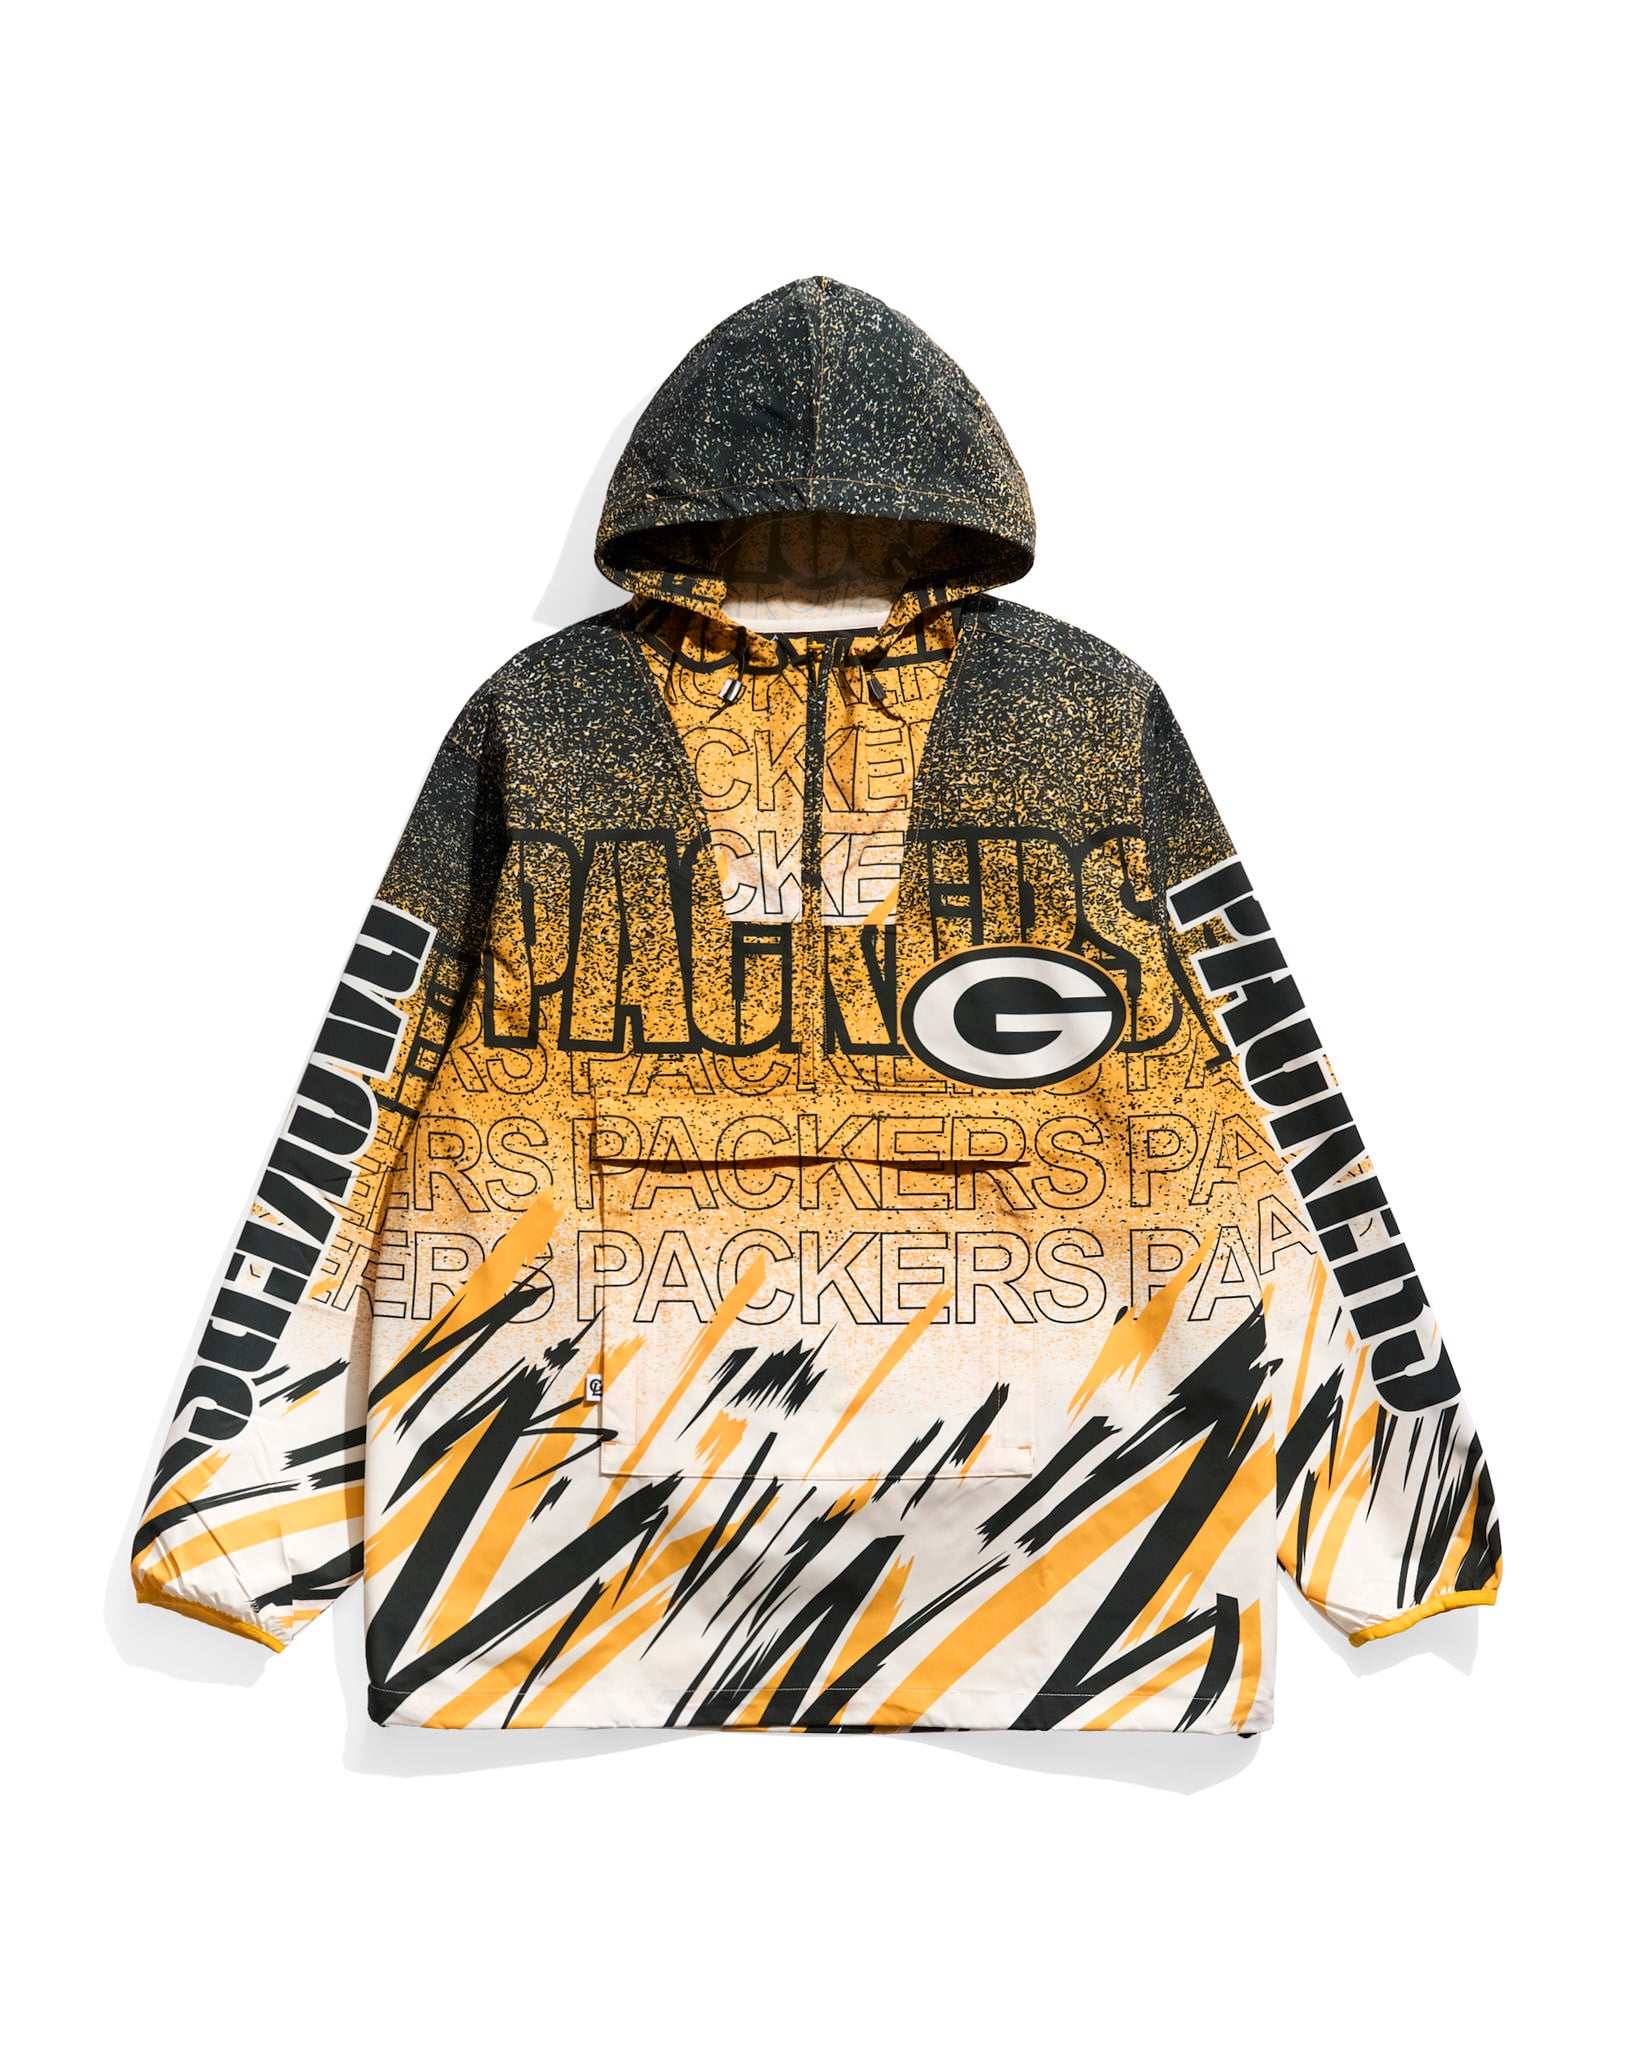 Green Bay Packers Sketch Pad Anorak Jacket